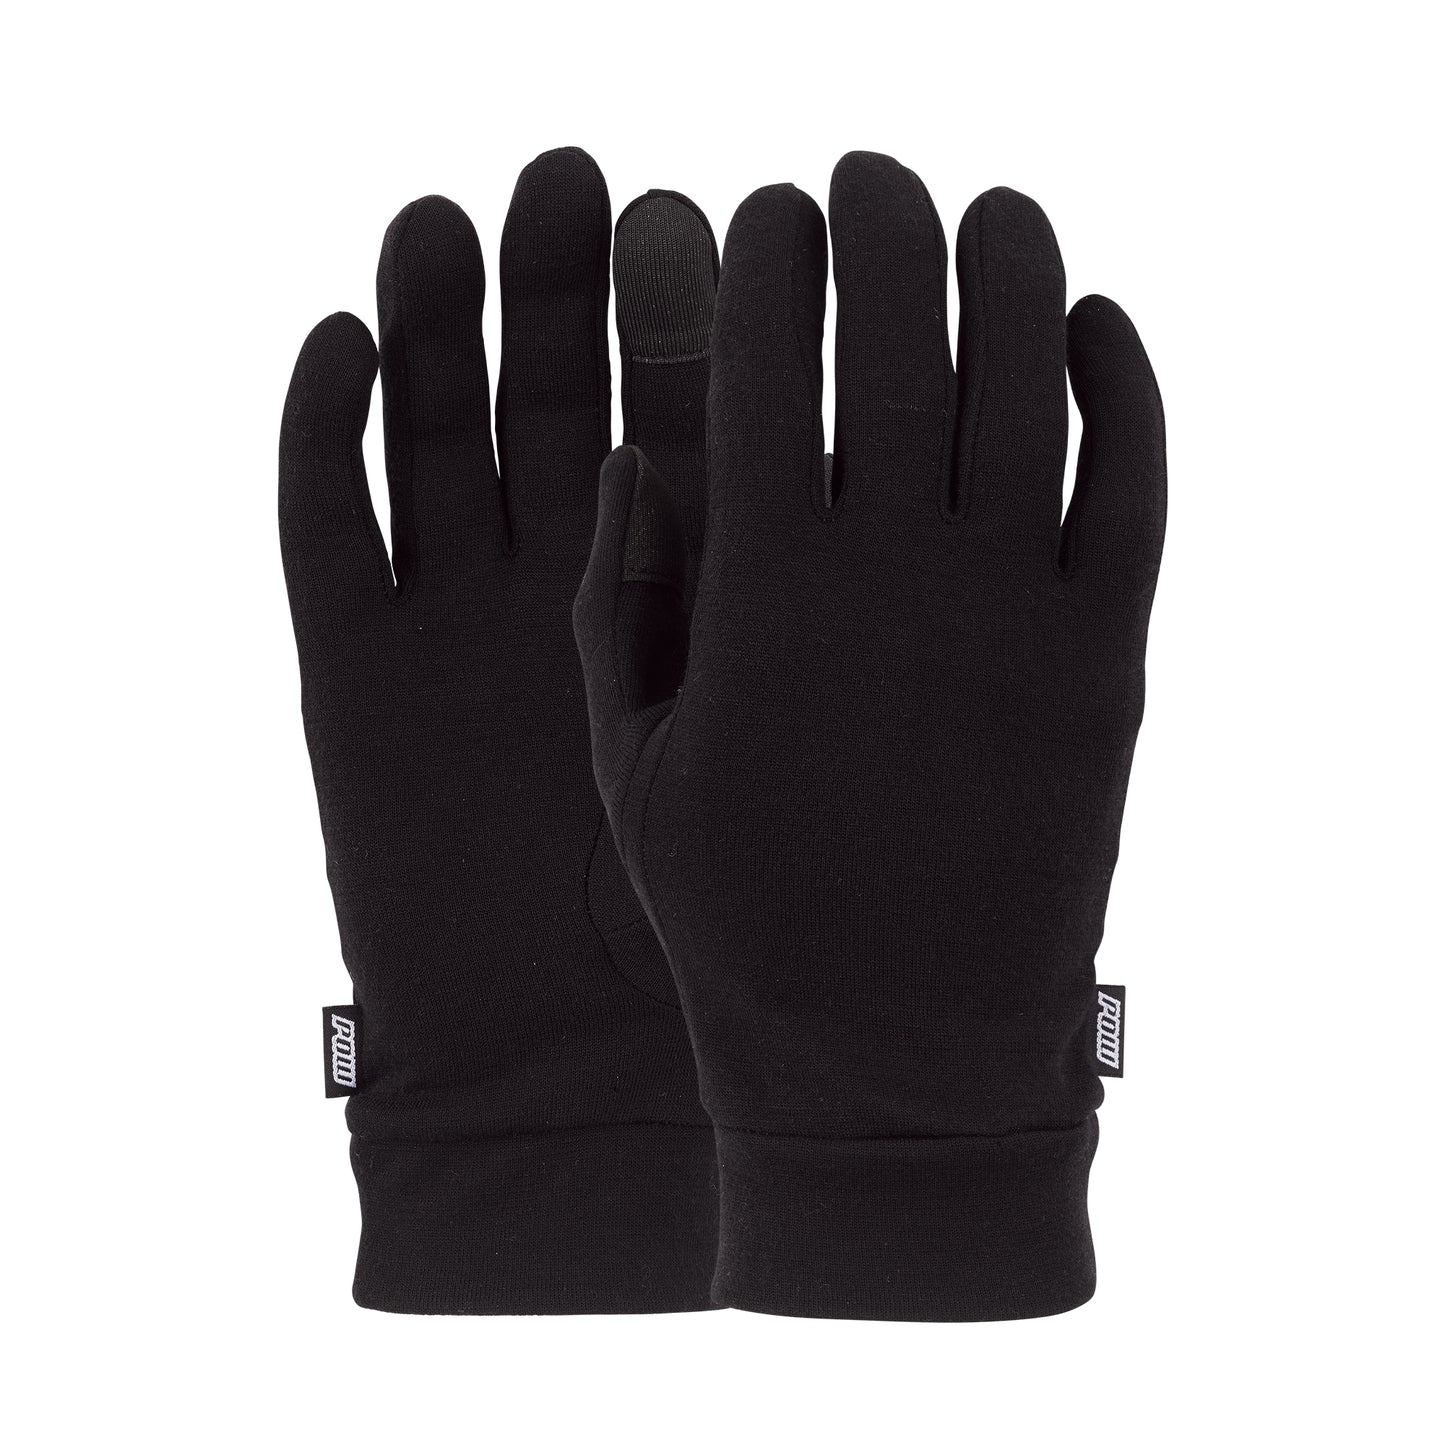 POW Gloves - Crescent GTX Long Cuff Women's Ski / Snowboard Mitten's